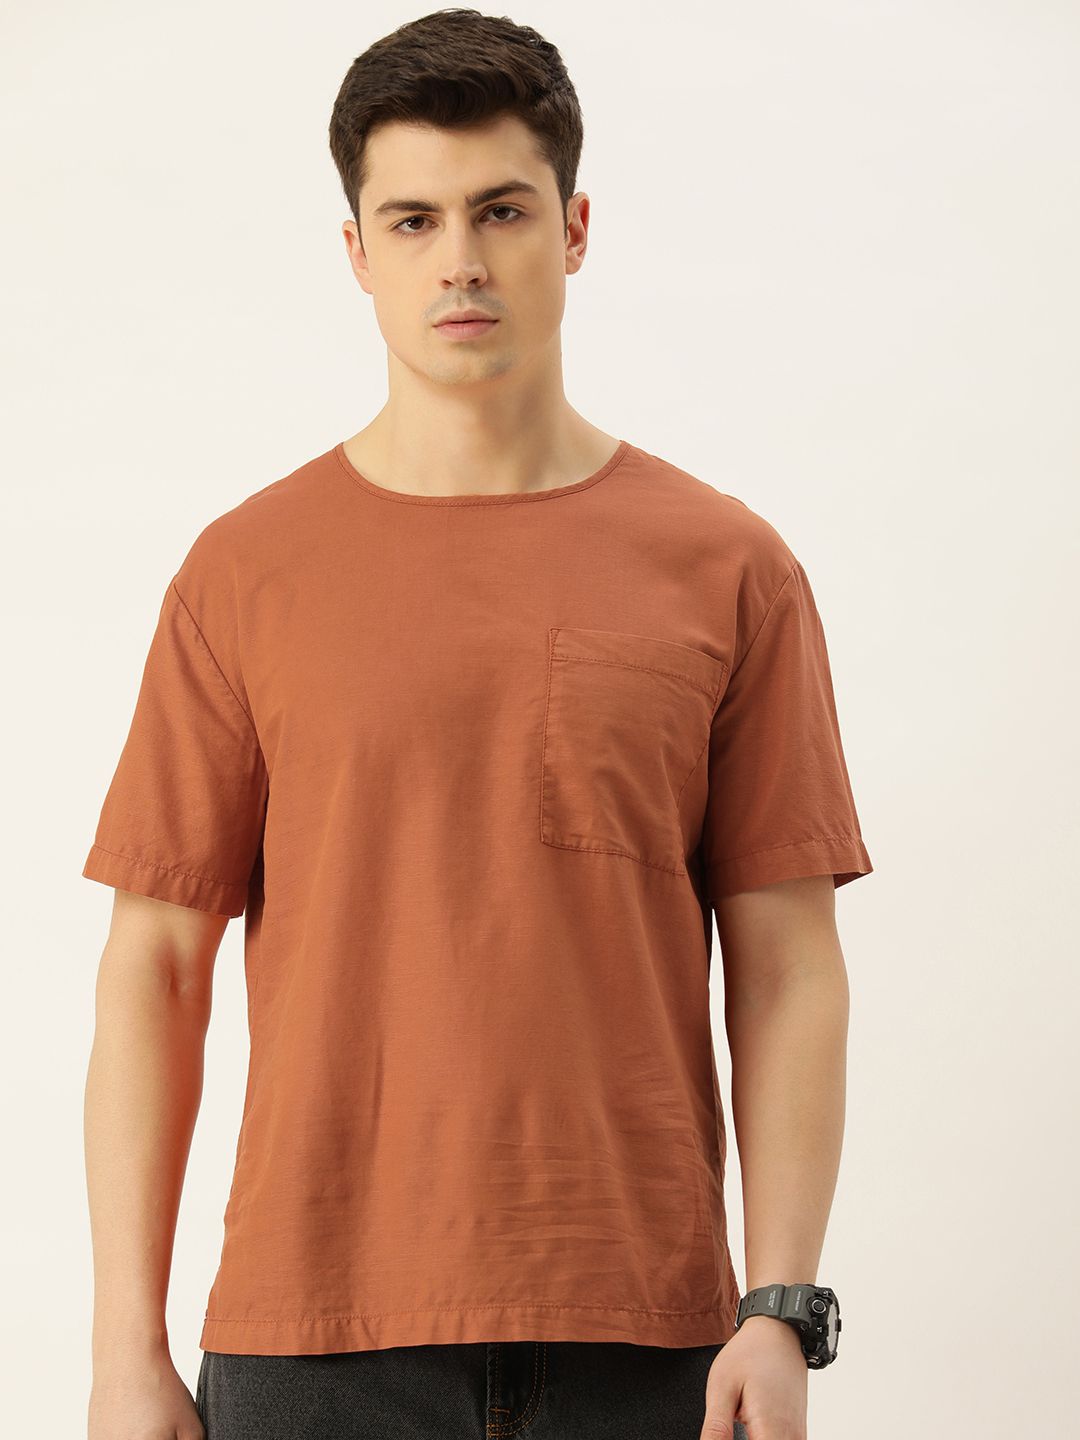     			Bene Kleed Cotton Blend Regular Fit Solids Half Sleeves Men's Casual Shirt - Rust ( Pack of 1 )